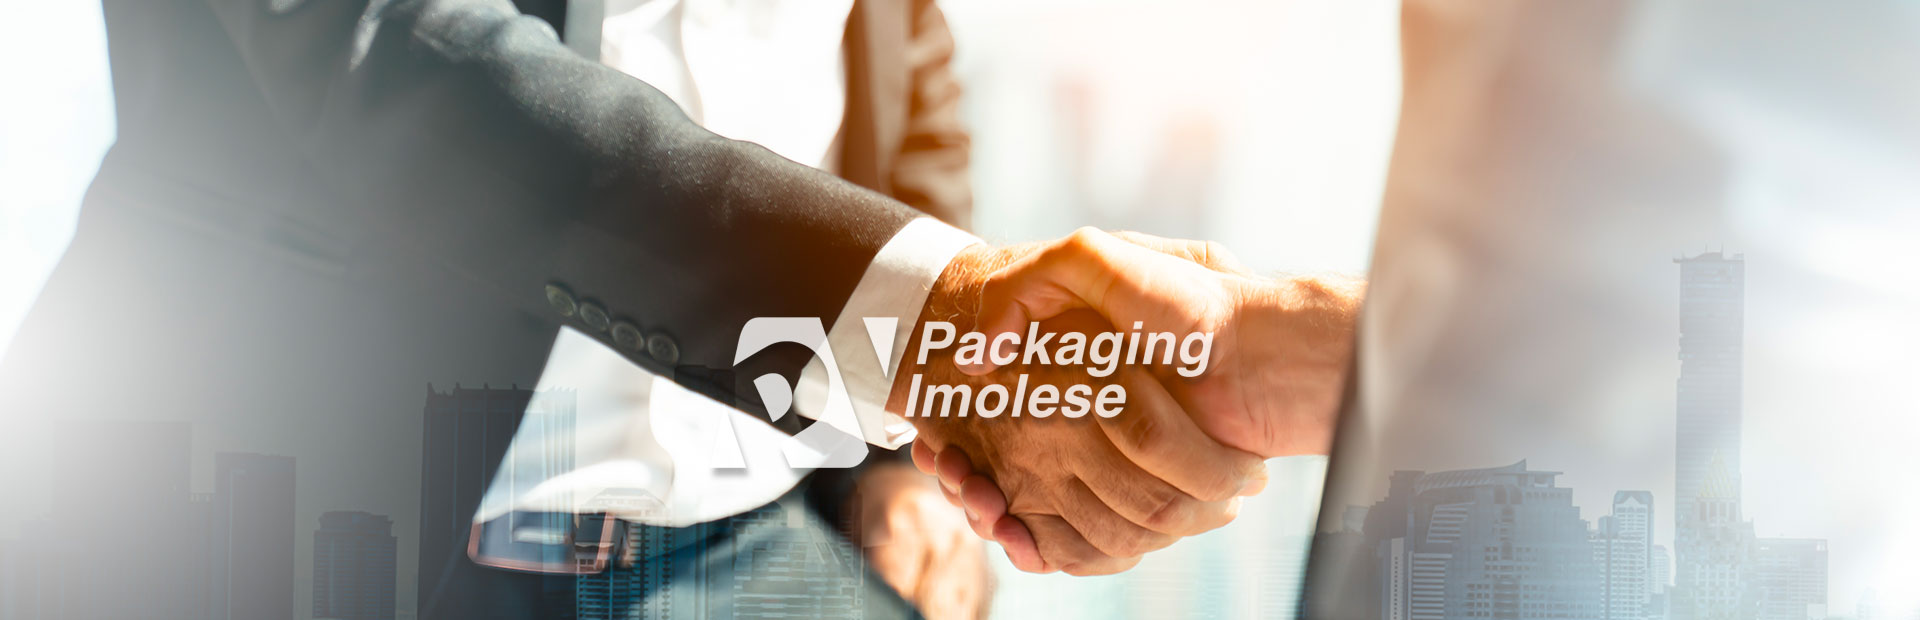 Packaging Imolese - rete vendita